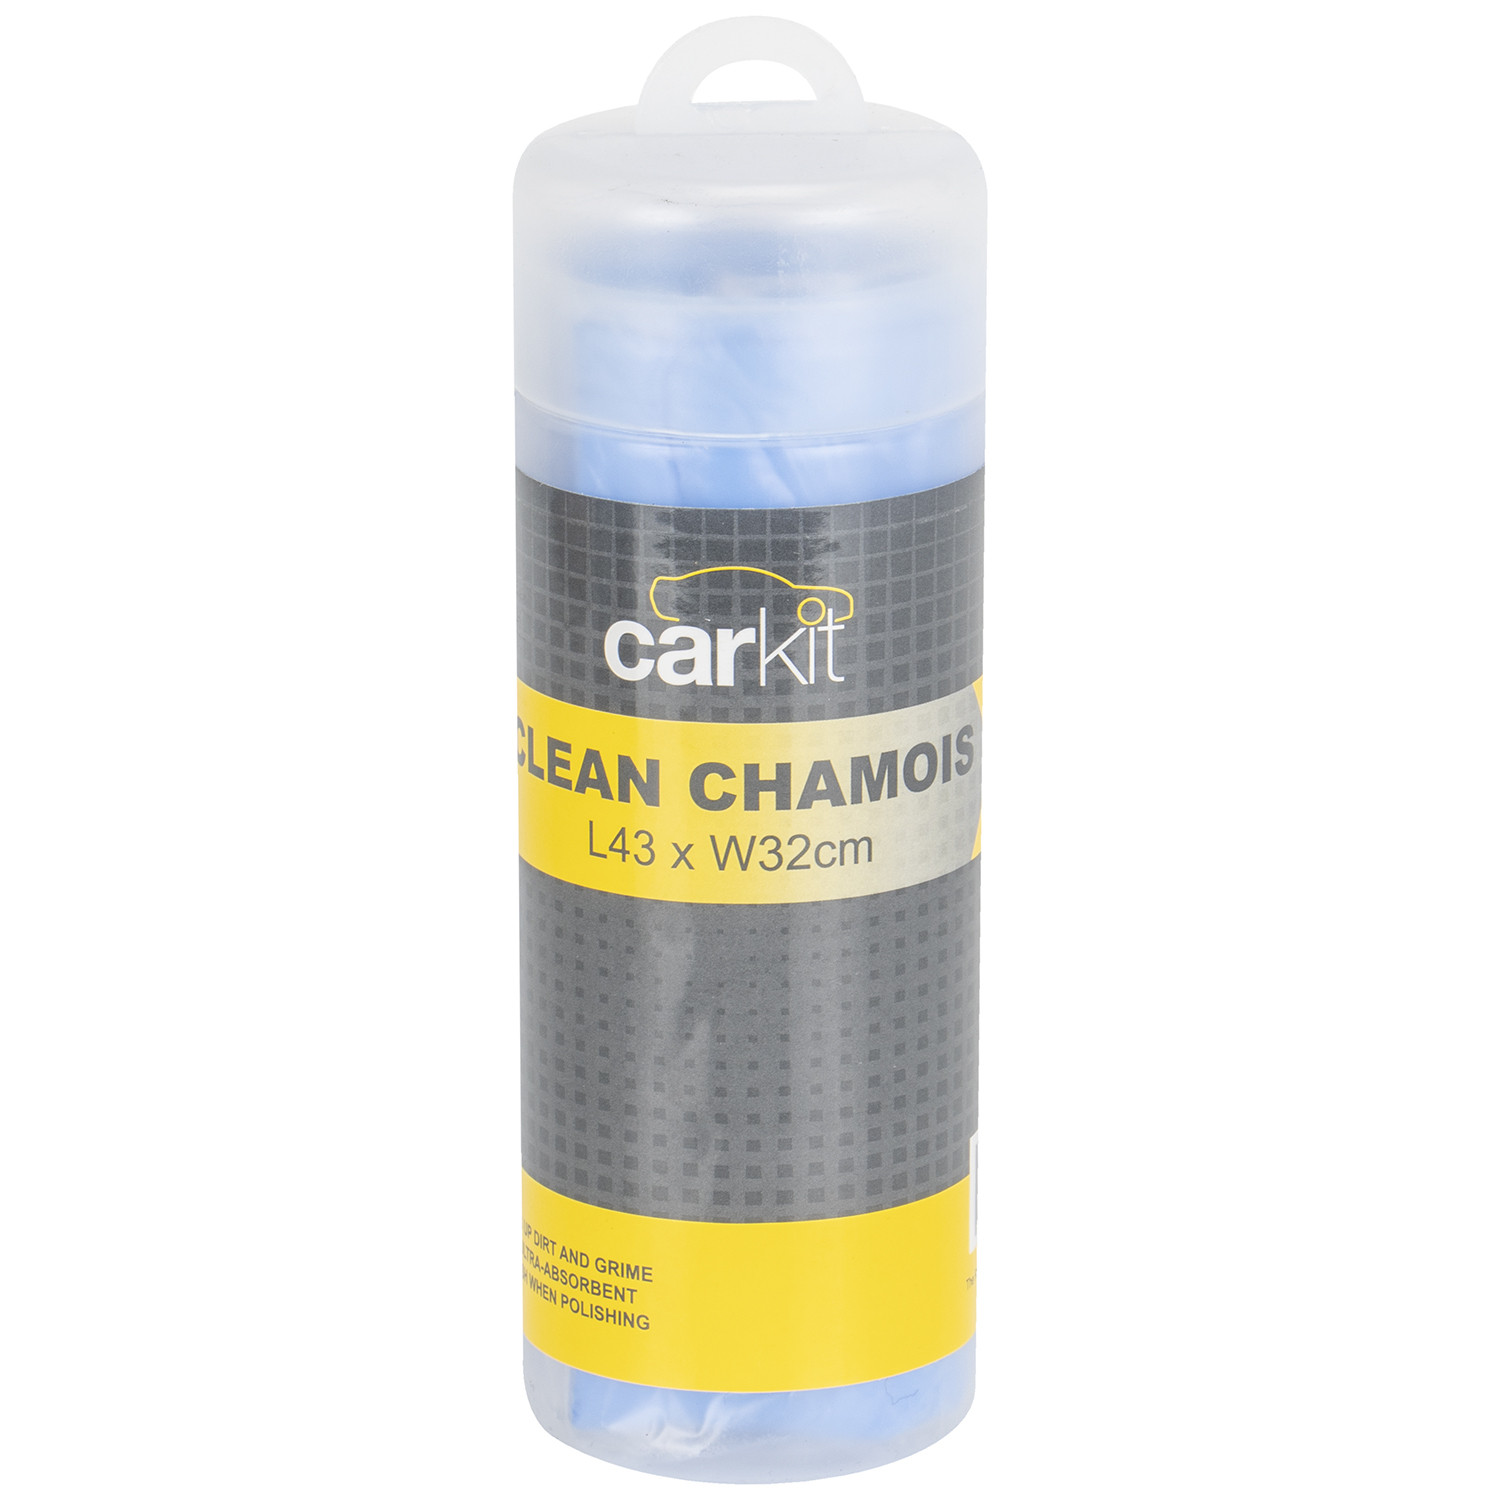 Clean Chamois Image